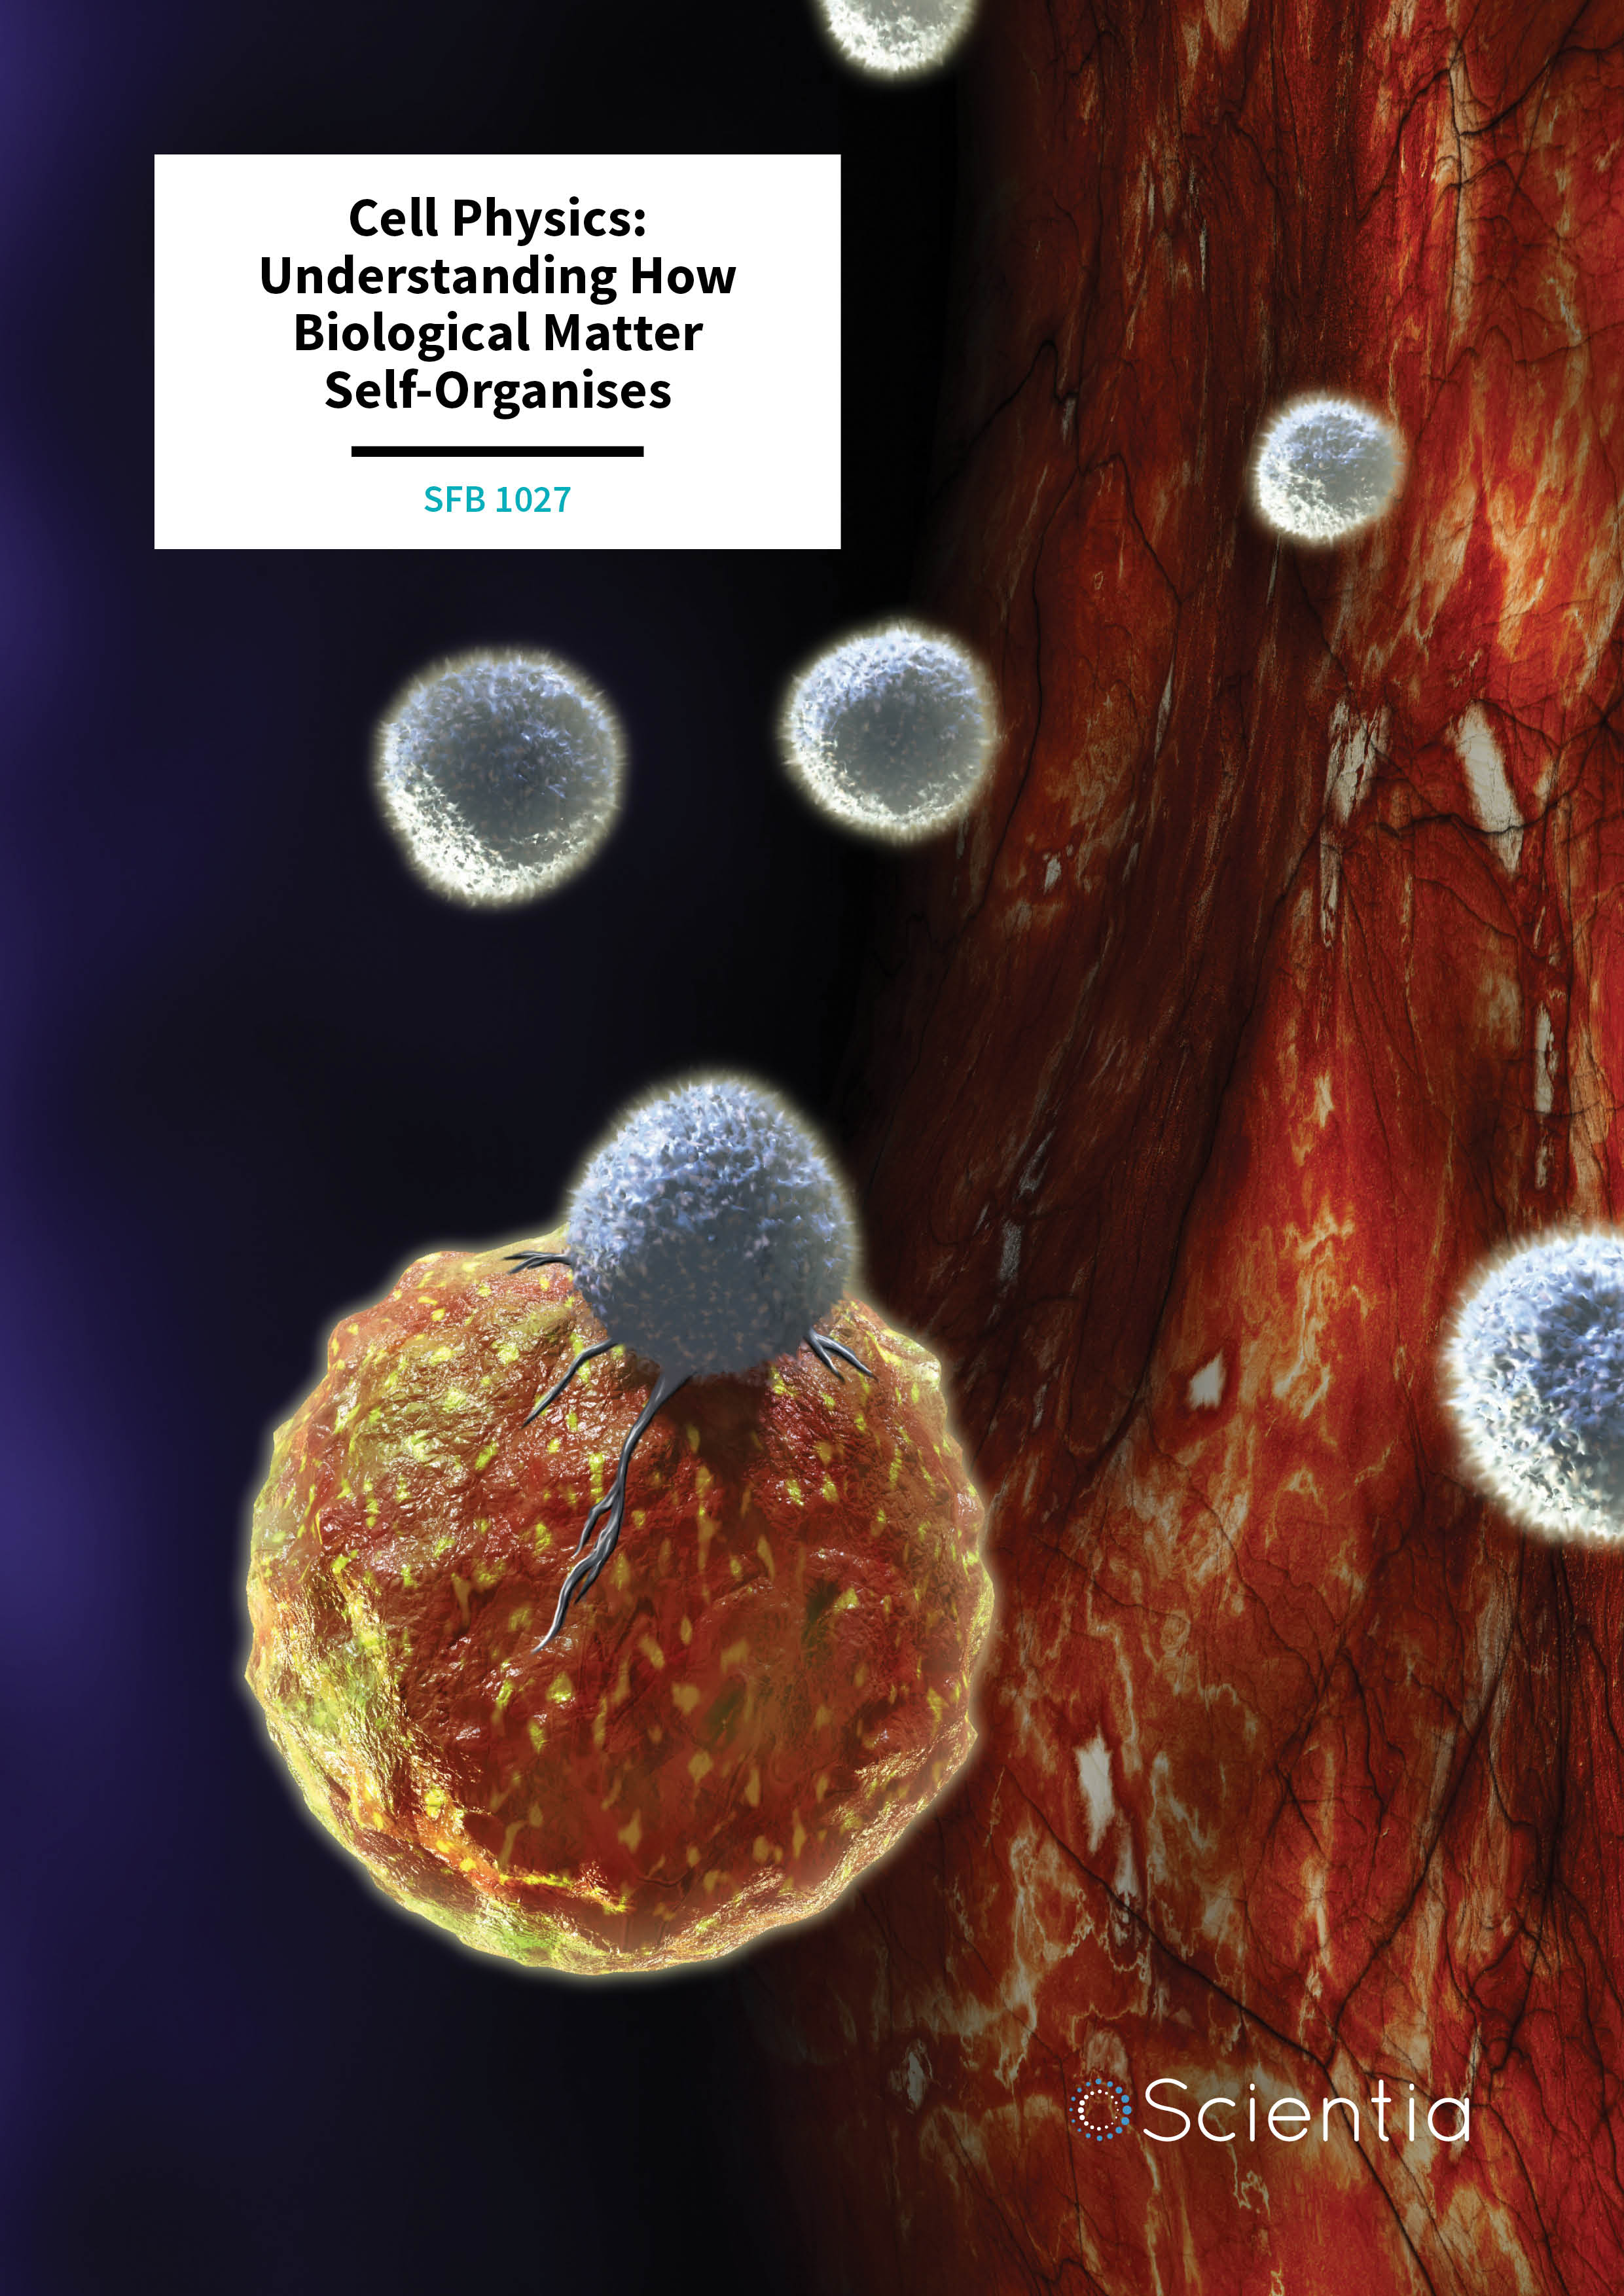 SFB 1027 – Cell Physics: Understanding How Biological Matter Self-Organises